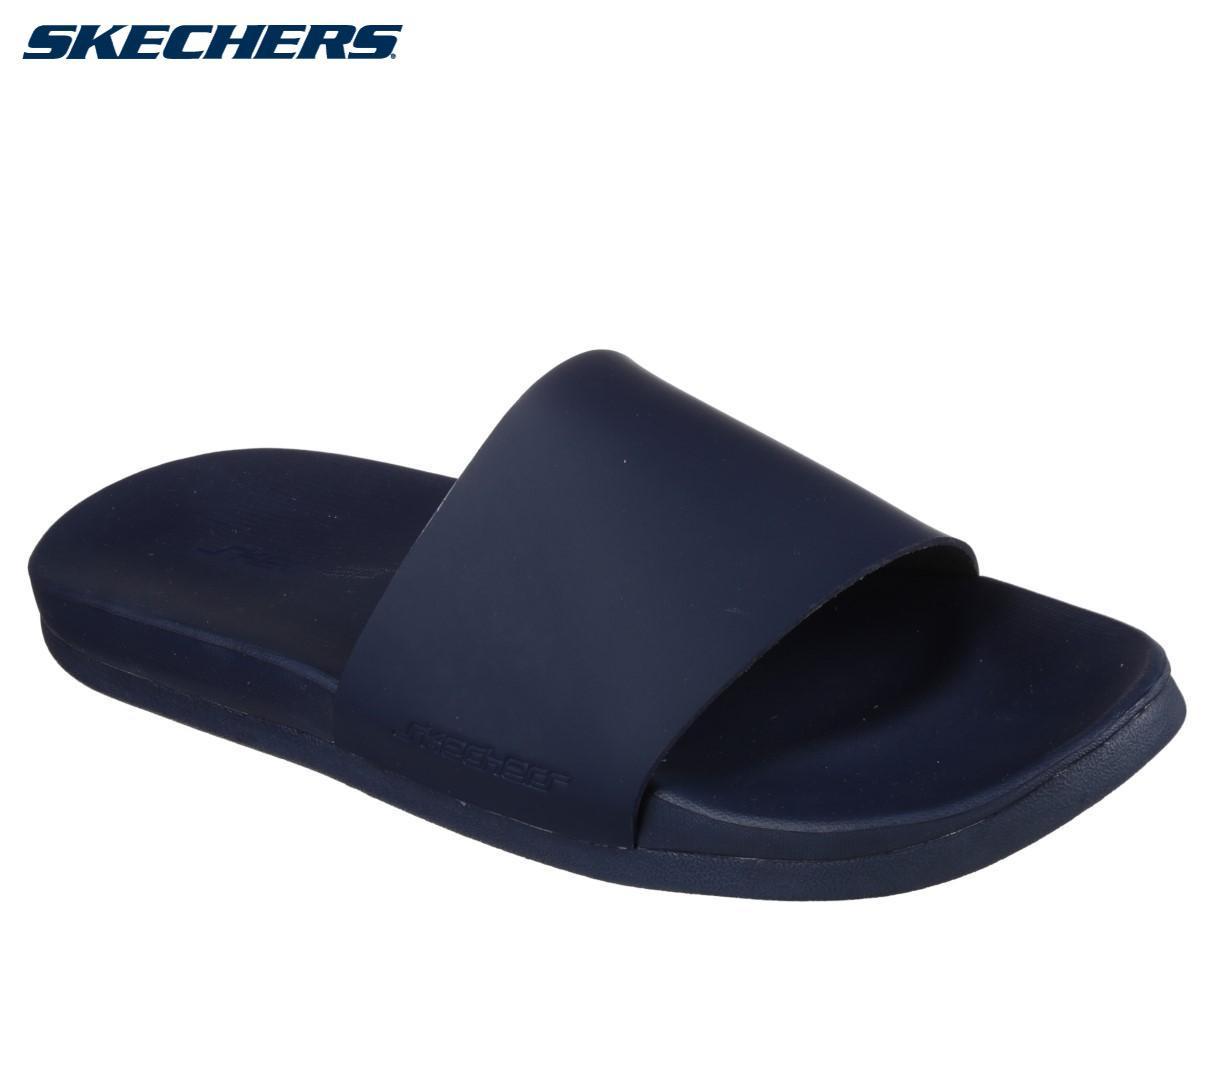 Skechers - Buy Skechers at Best Price in Nepal | www.daraz.com.np